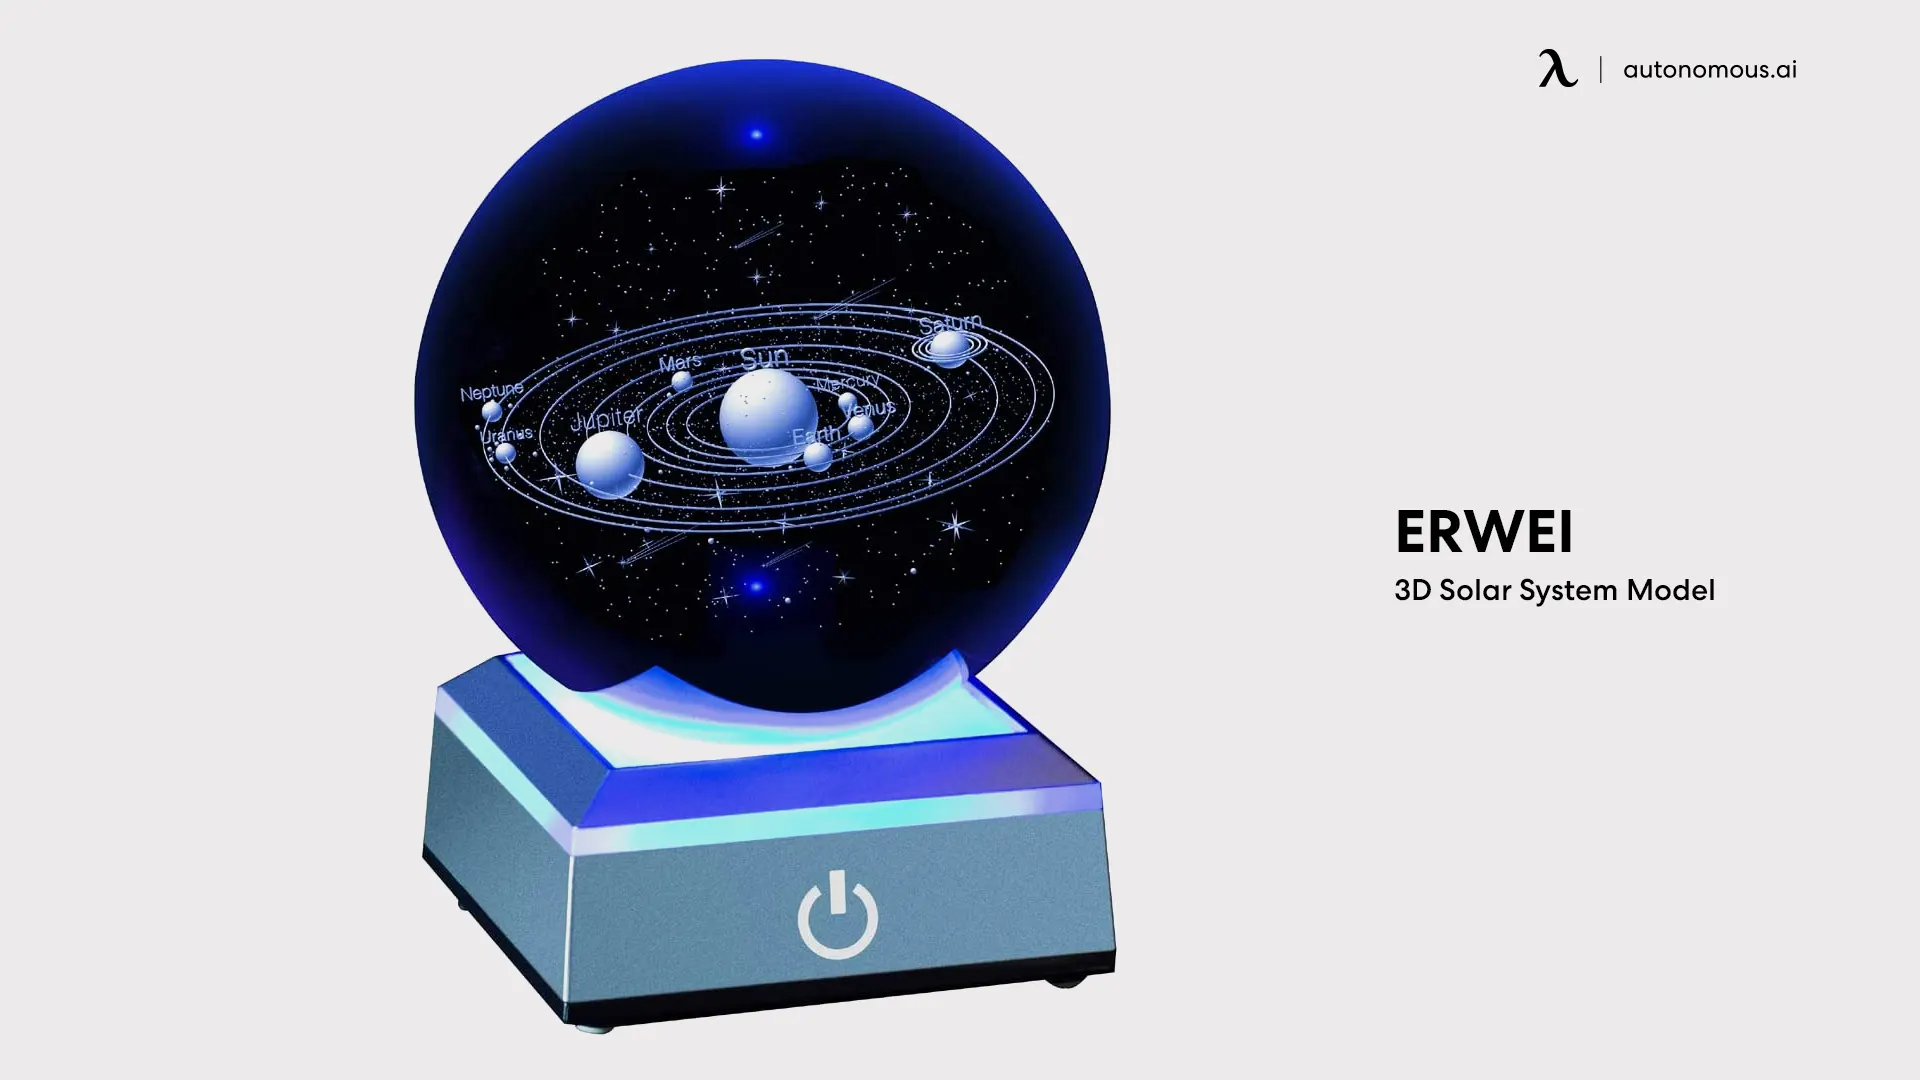 ERWEI 3D Solar System Model